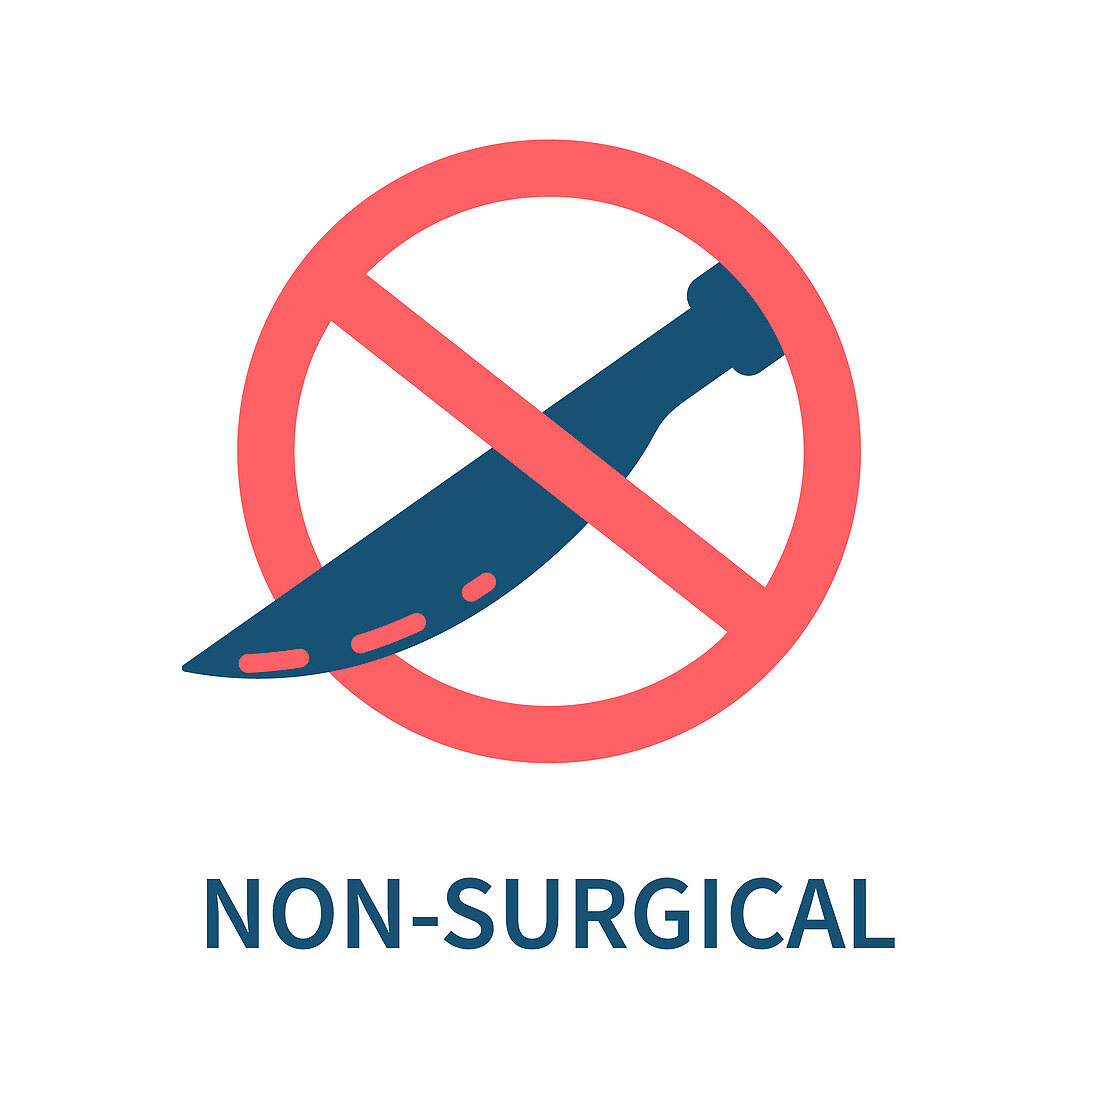 Non-surgical procedure, conceptual illustration